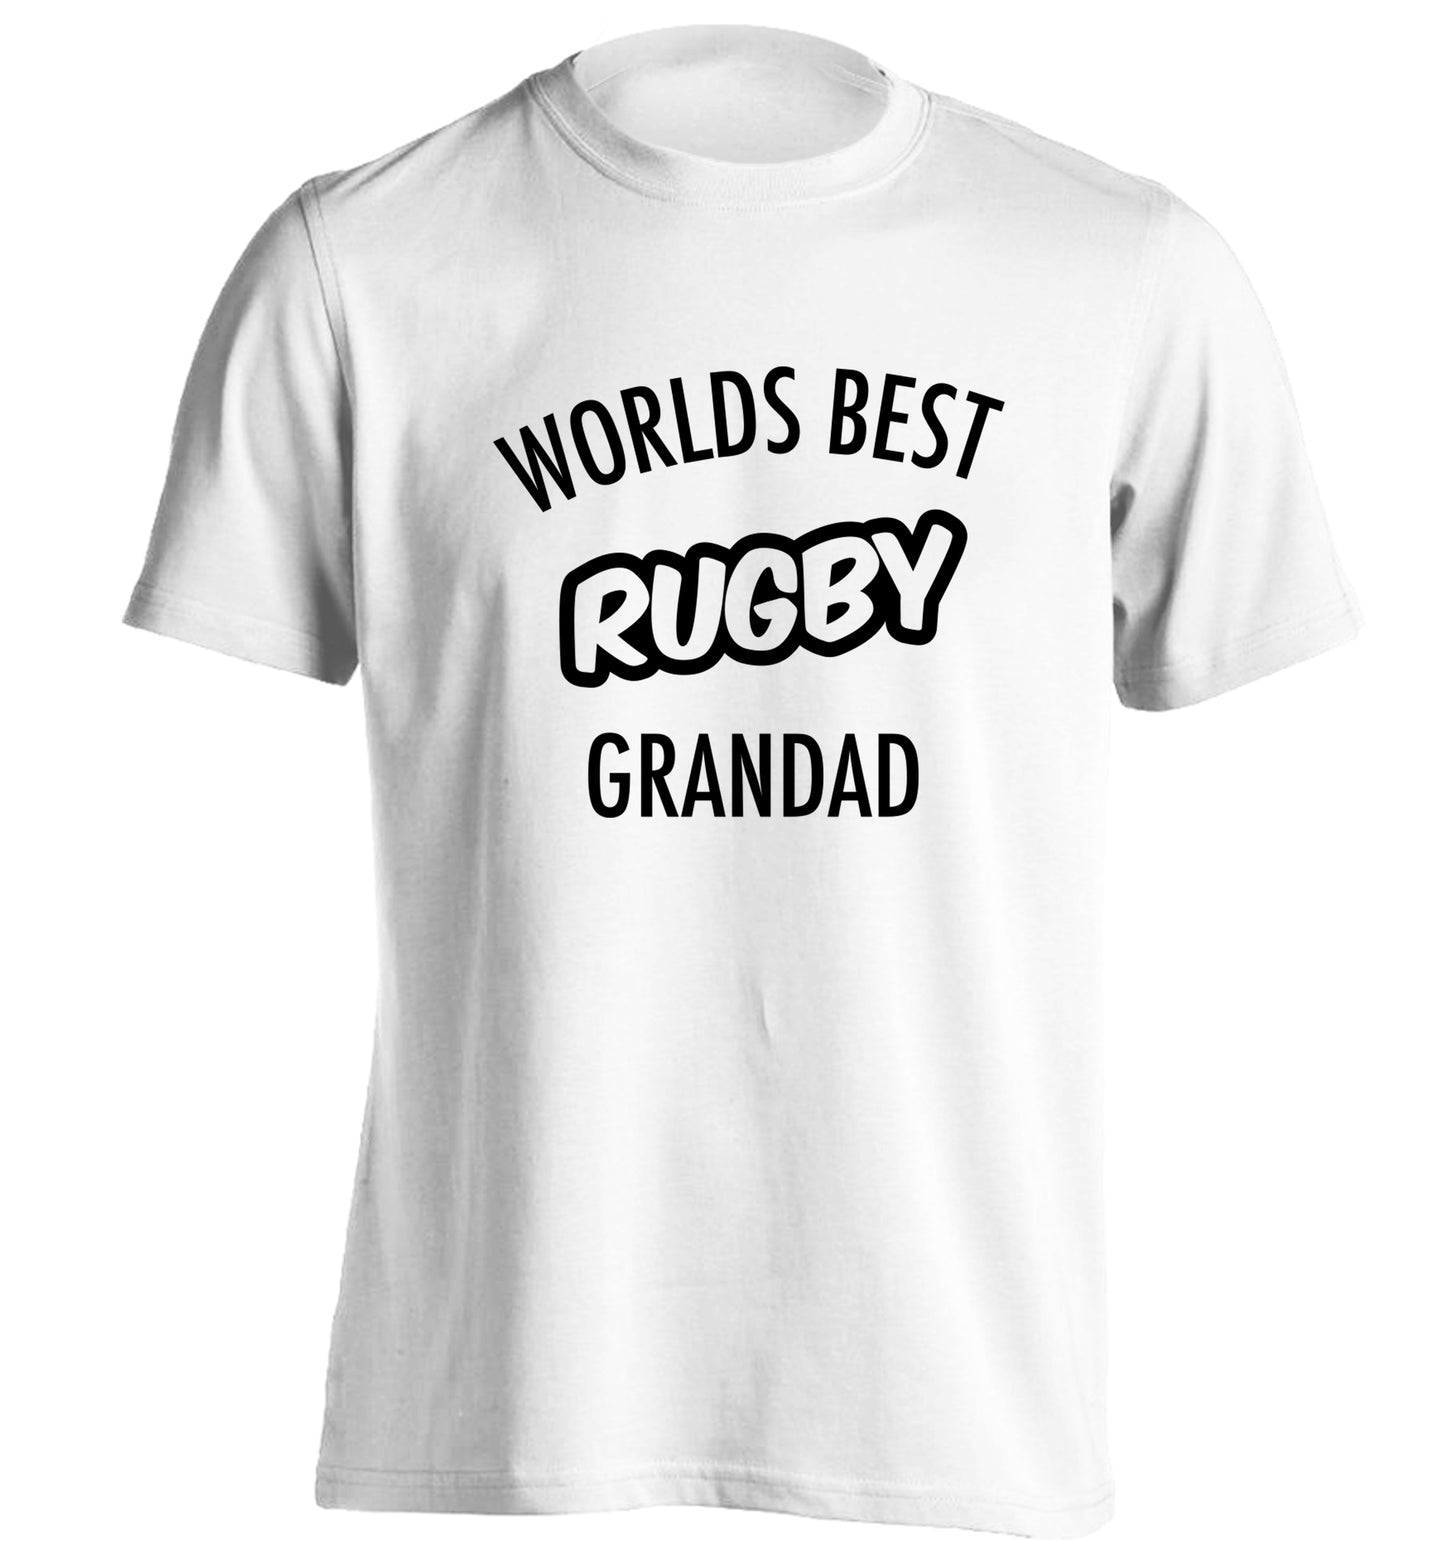 Worlds best rugby grandad adults unisex white Tshirt 2XL